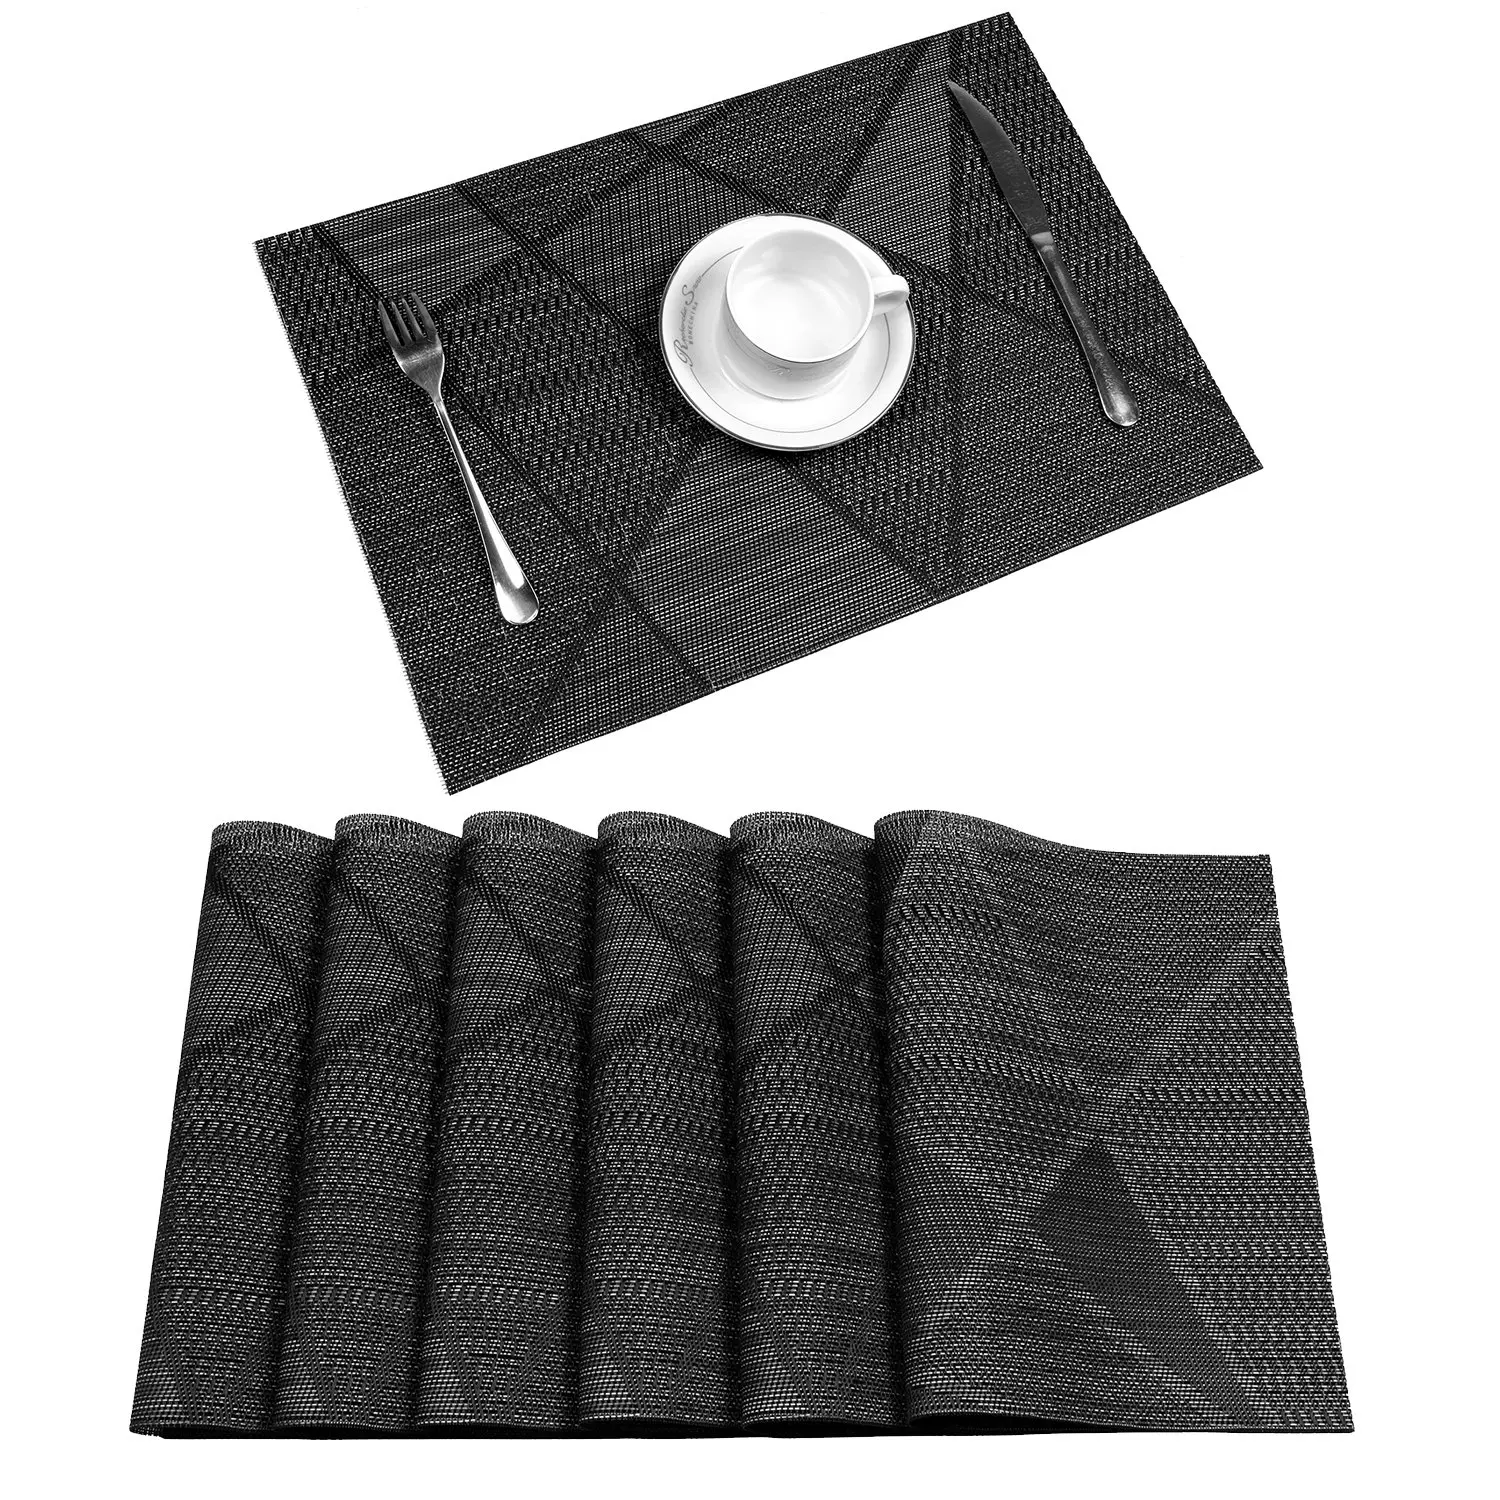 UArtlines Placemat Crossweave Woven Vinyl Non-Slip Insulation Placemat Washable Table Mats Set of 6 6pcs placemats, Silver-Gray